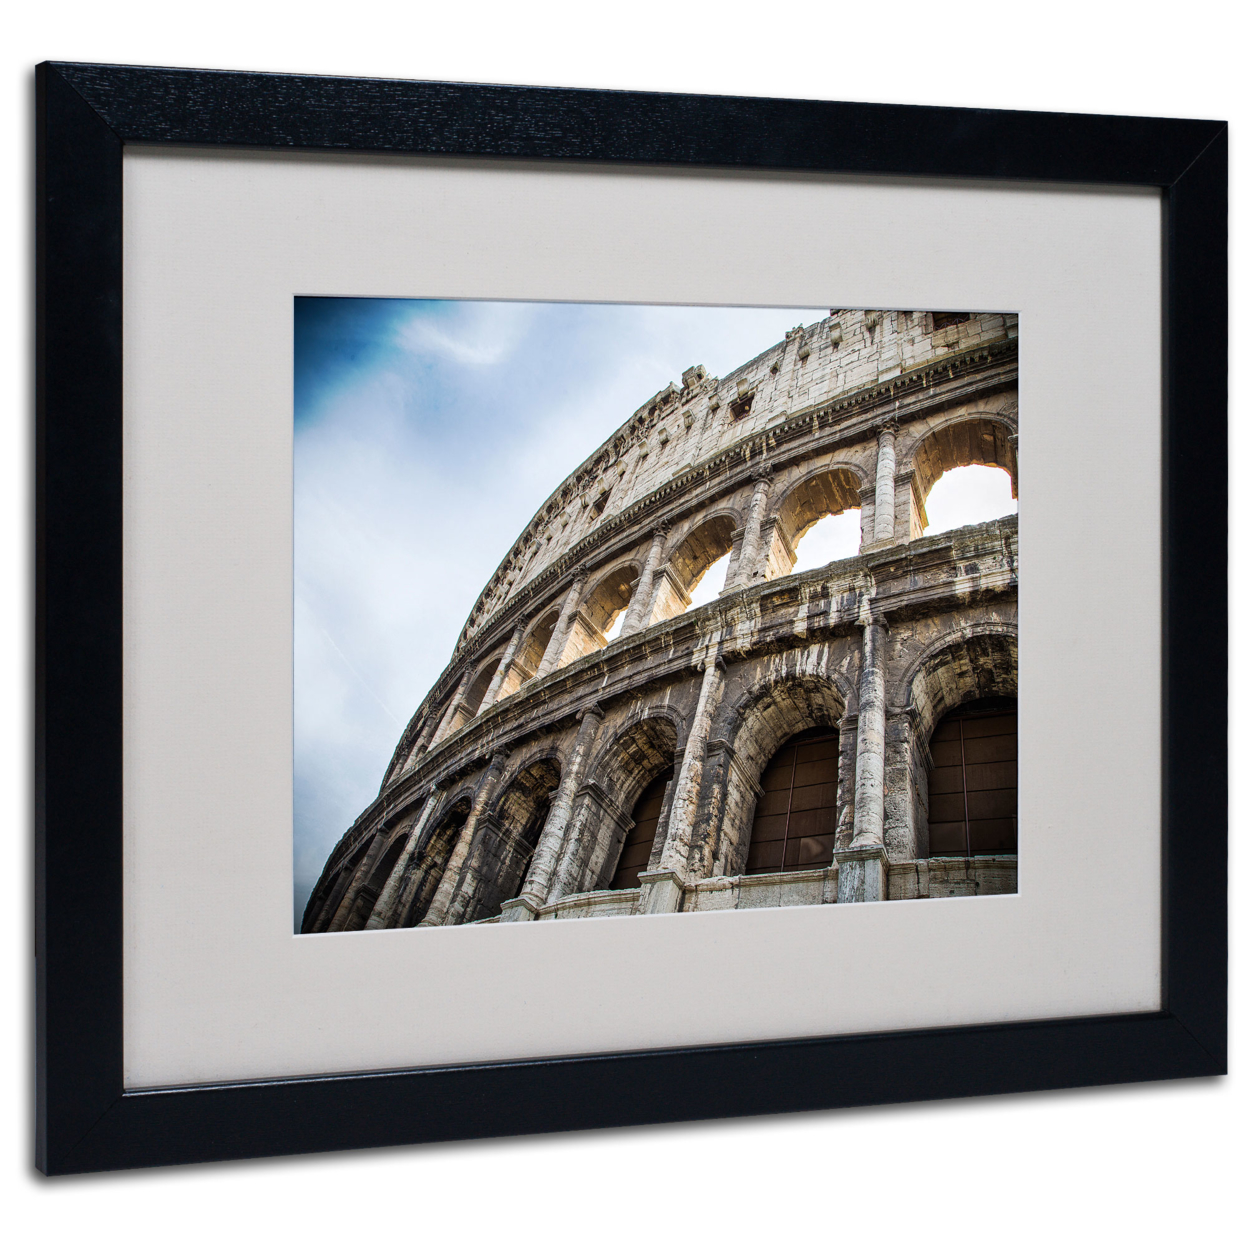 Giuseppe Torre 'Colosseo' Black Wooden Framed Art 18 X 22 Inches